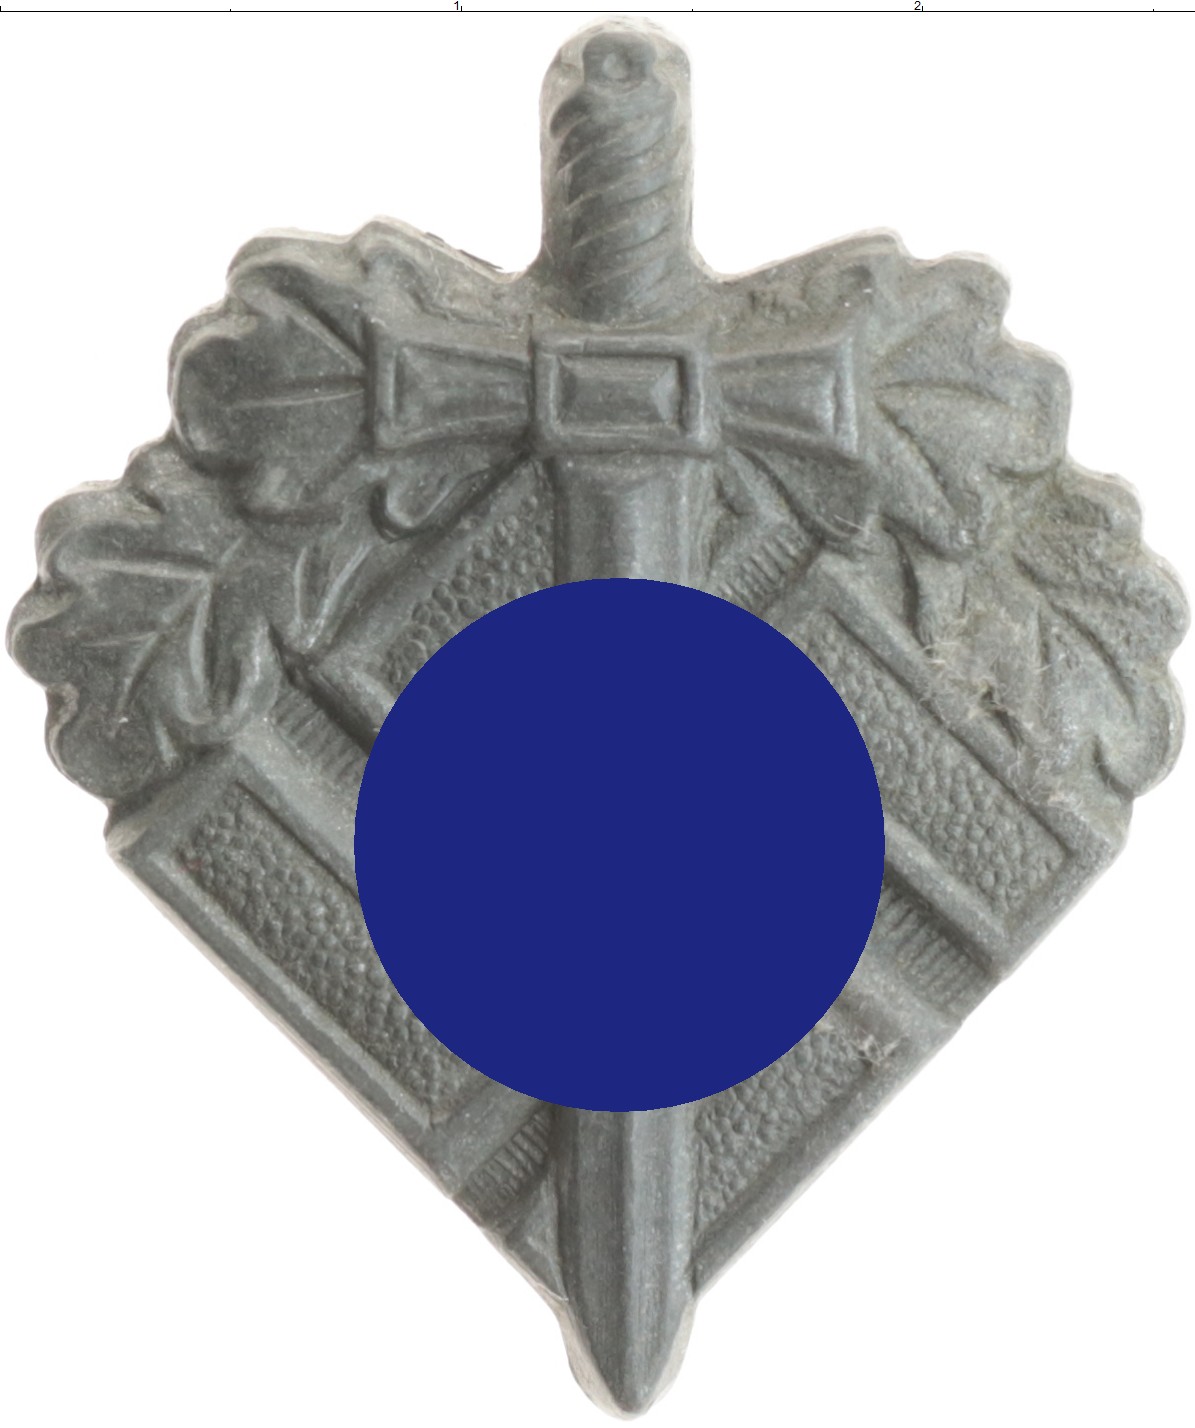 Знак zn. Ветеранский знак полка Варяг. Знак 3 рейха из сердечек.